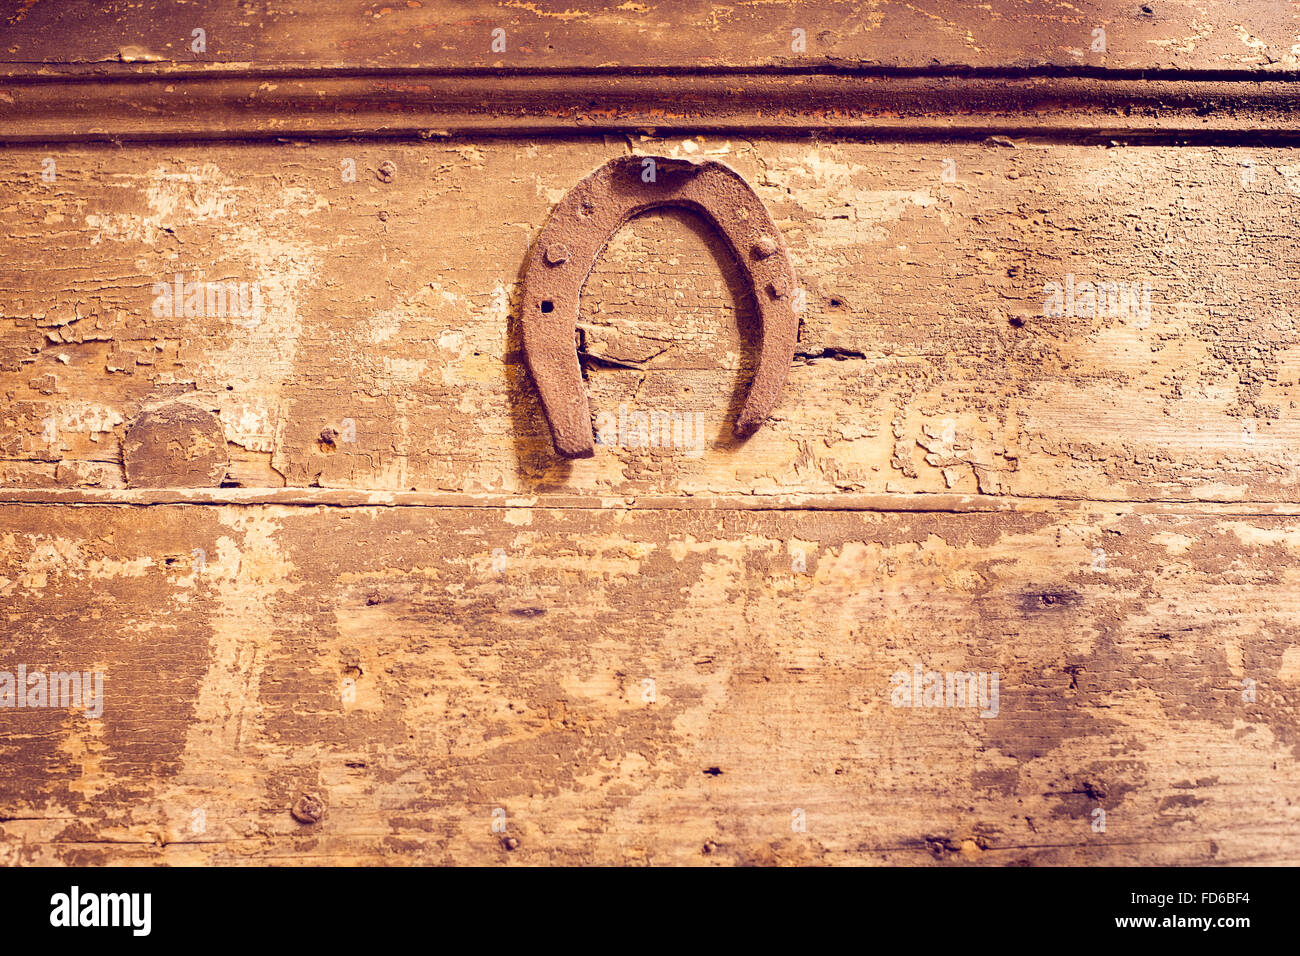 vintage rusty horseshoe nailed at the wooden wall Stock Photo